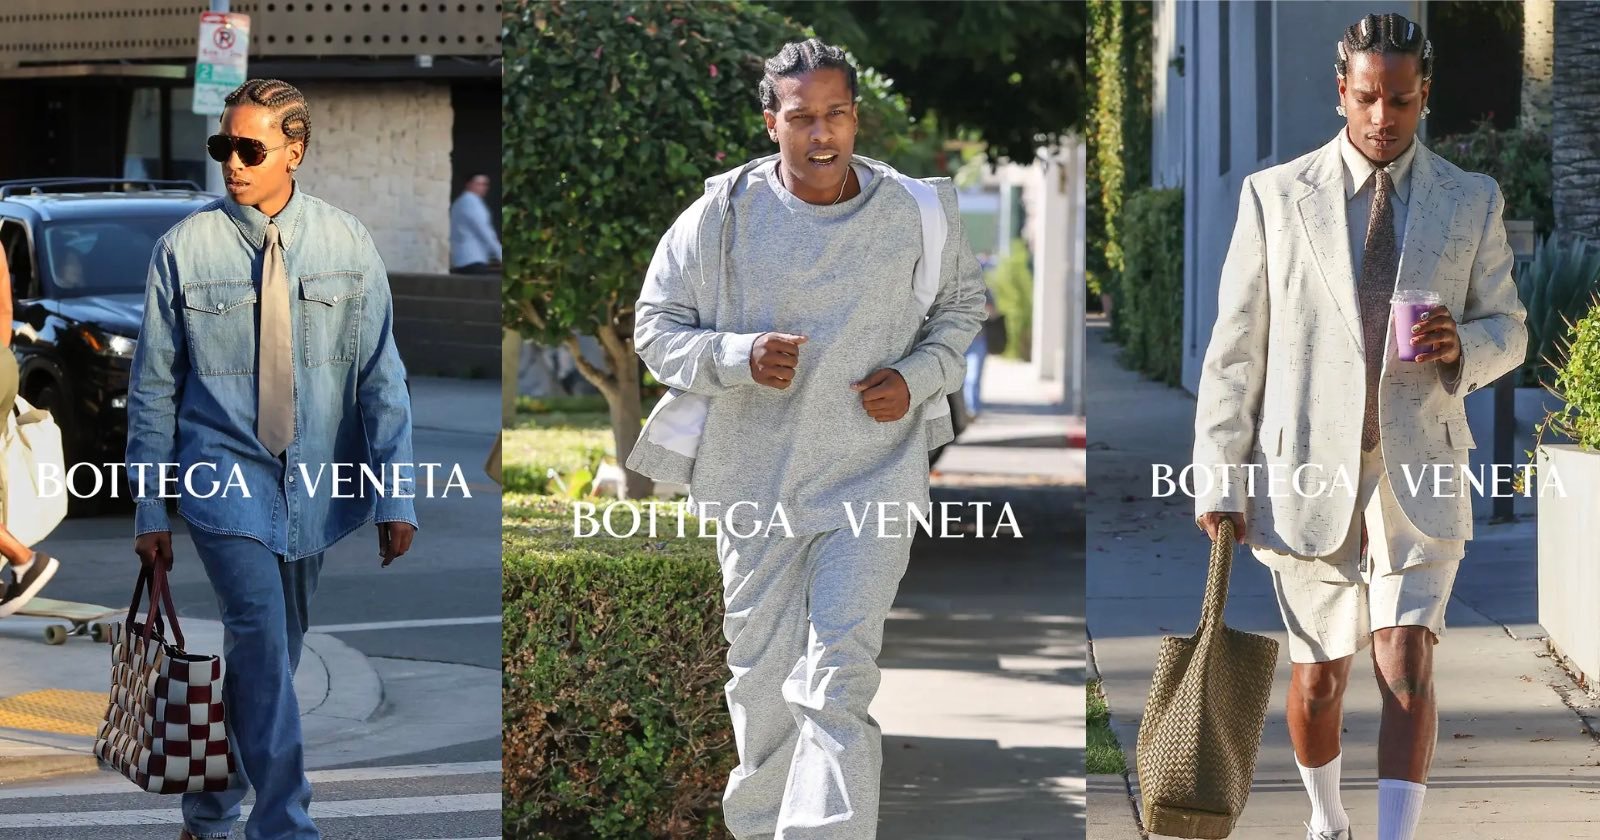 Bottega Veneta Licenses Paparazzi Photos of A$AP Rocky For Campaign